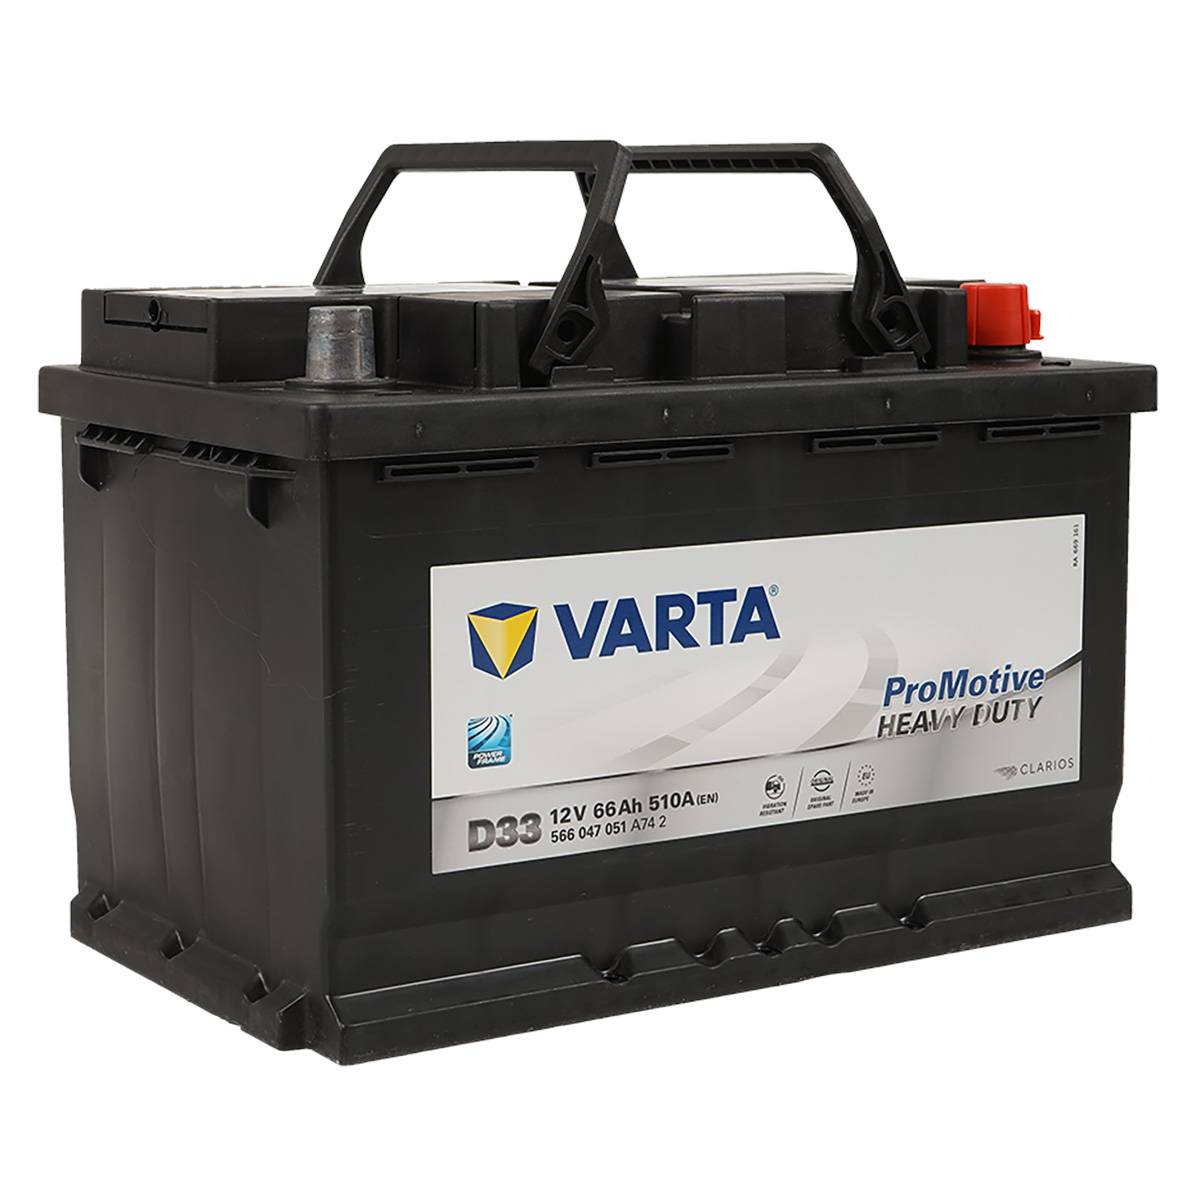 Varta B18 Car Battery, Car Batteries, 12 volt